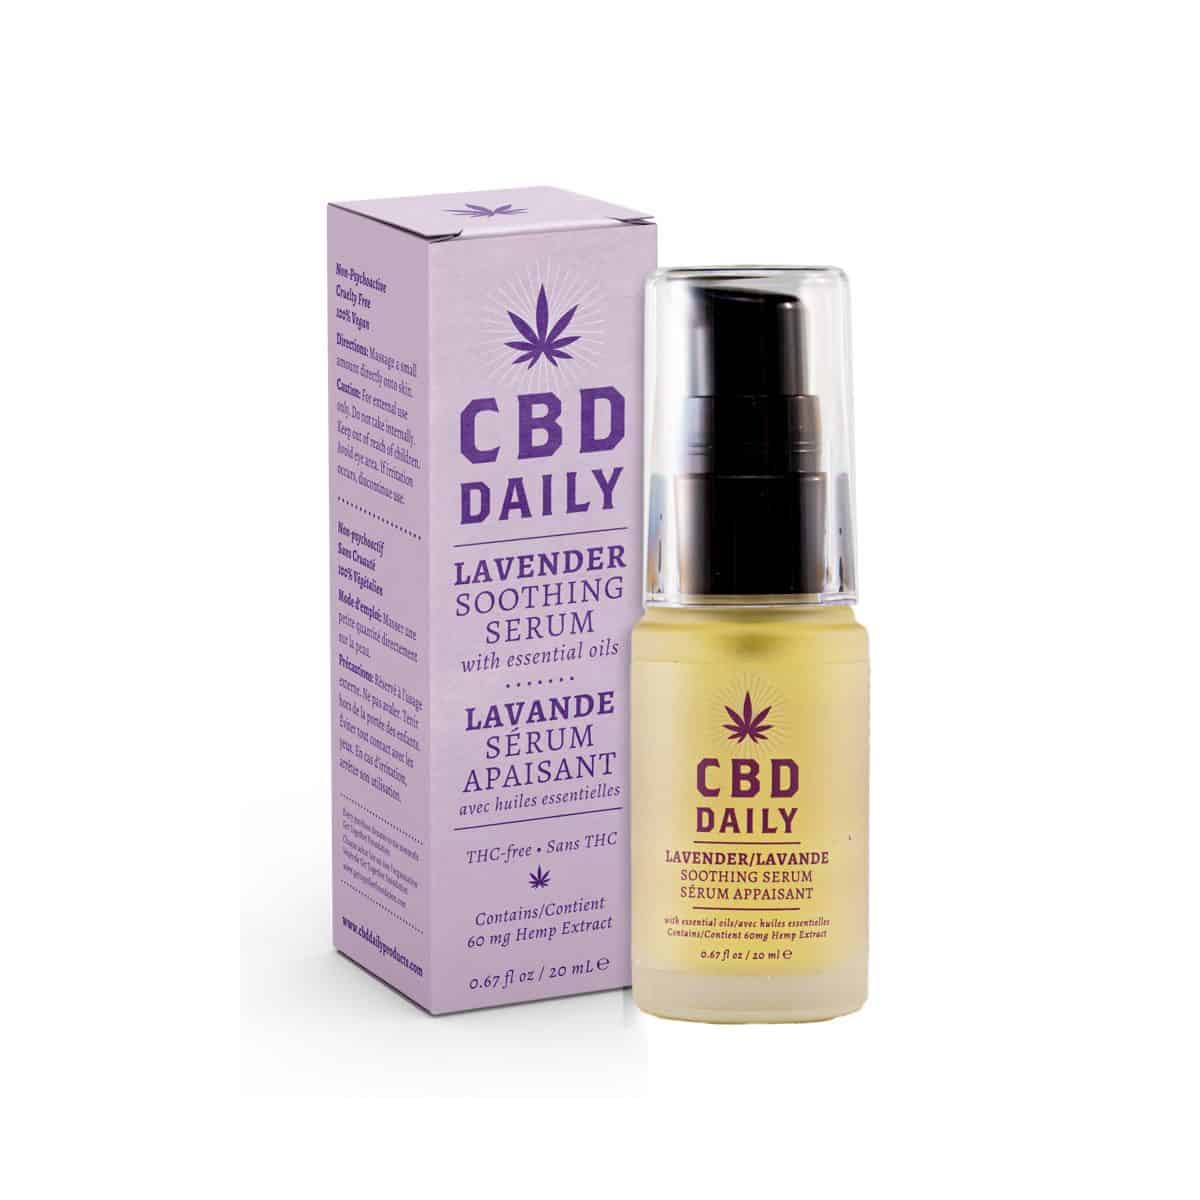 CBD Daily Lavender Serum